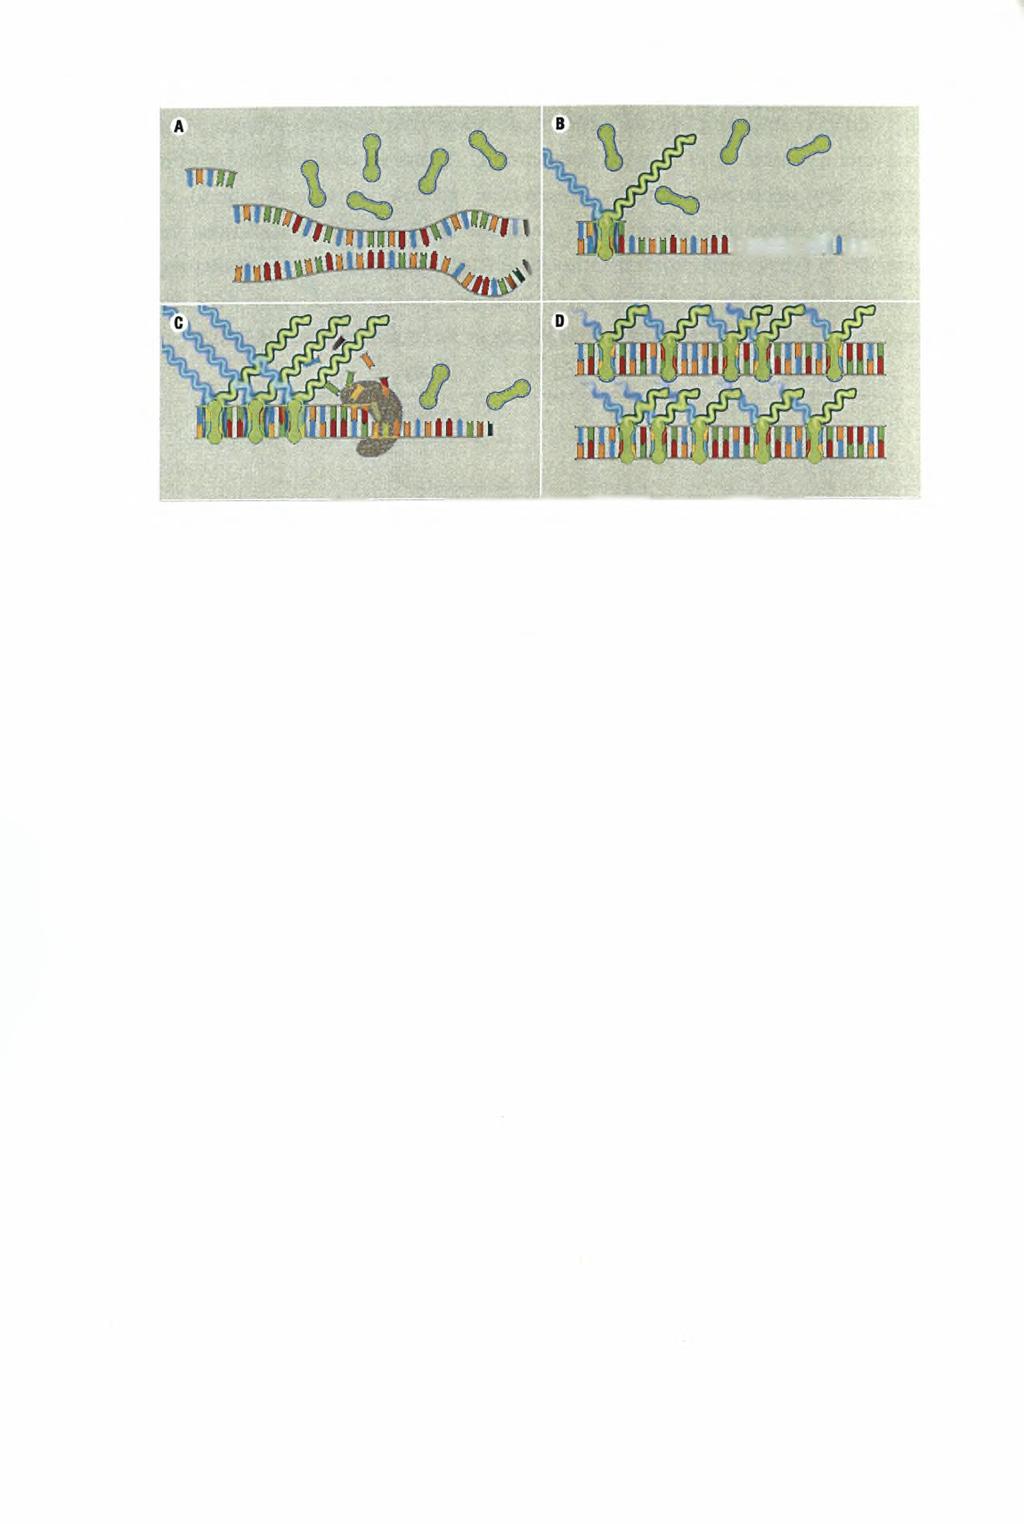 Uudiiiit.m Εικόνα 3. Η χρωστική SYBR Green παρεμβάλλεται ανάμεσα στις βάσεις του DNA και εκπέμπει φθορισμό που ανιχνεύεται από το μηχάνημα. Β.